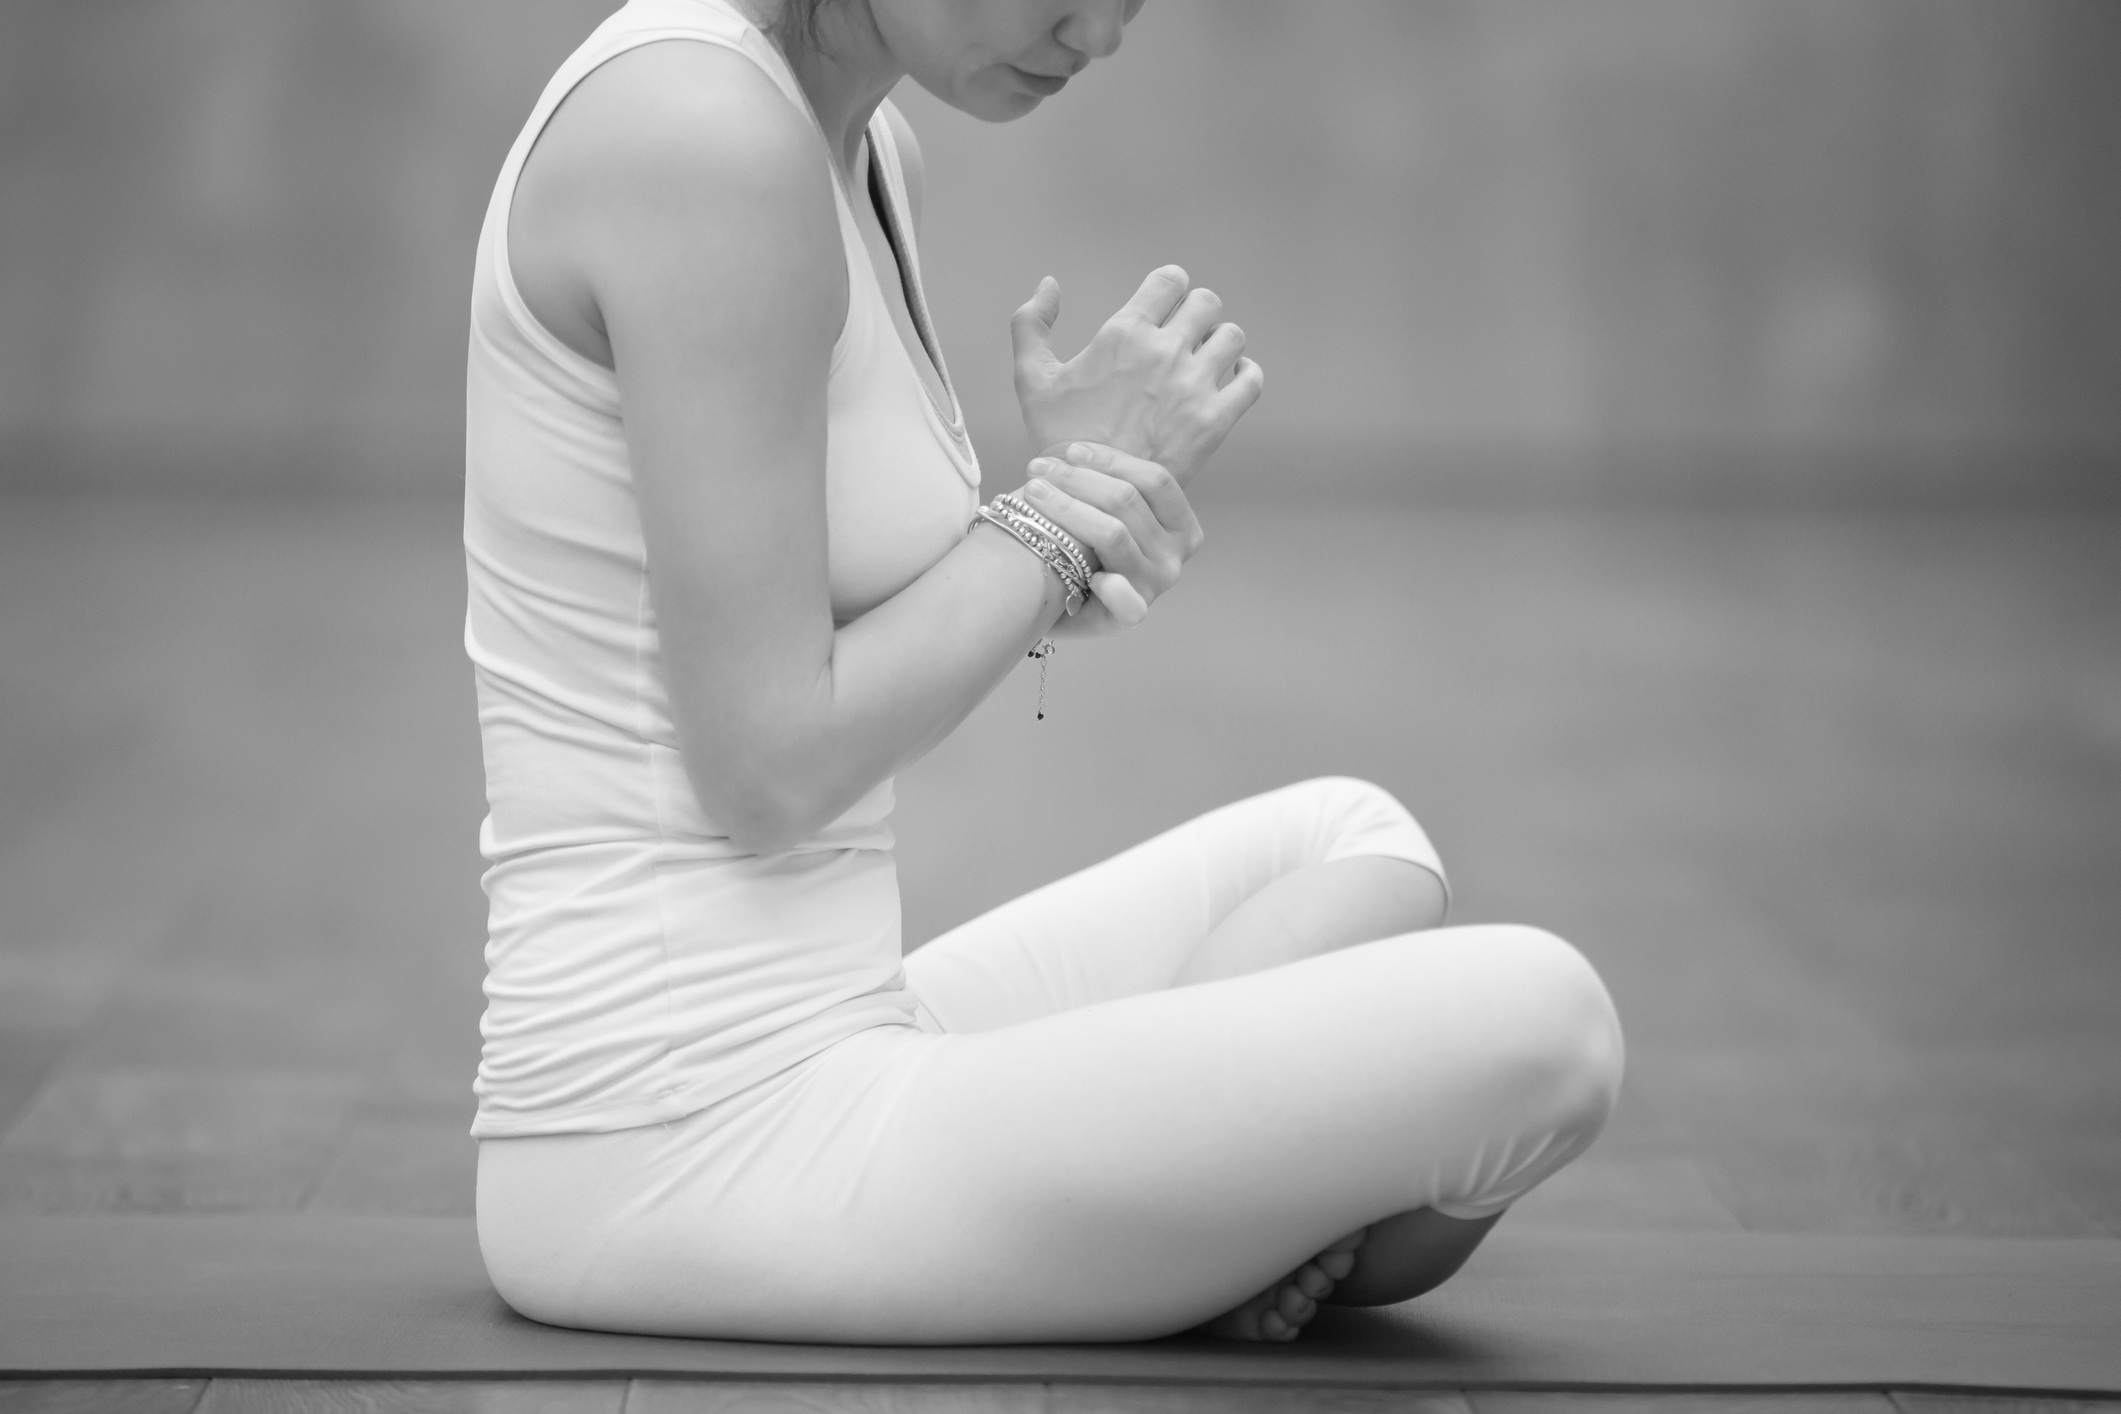 yoga injury, side effects of yoga, wrist pain